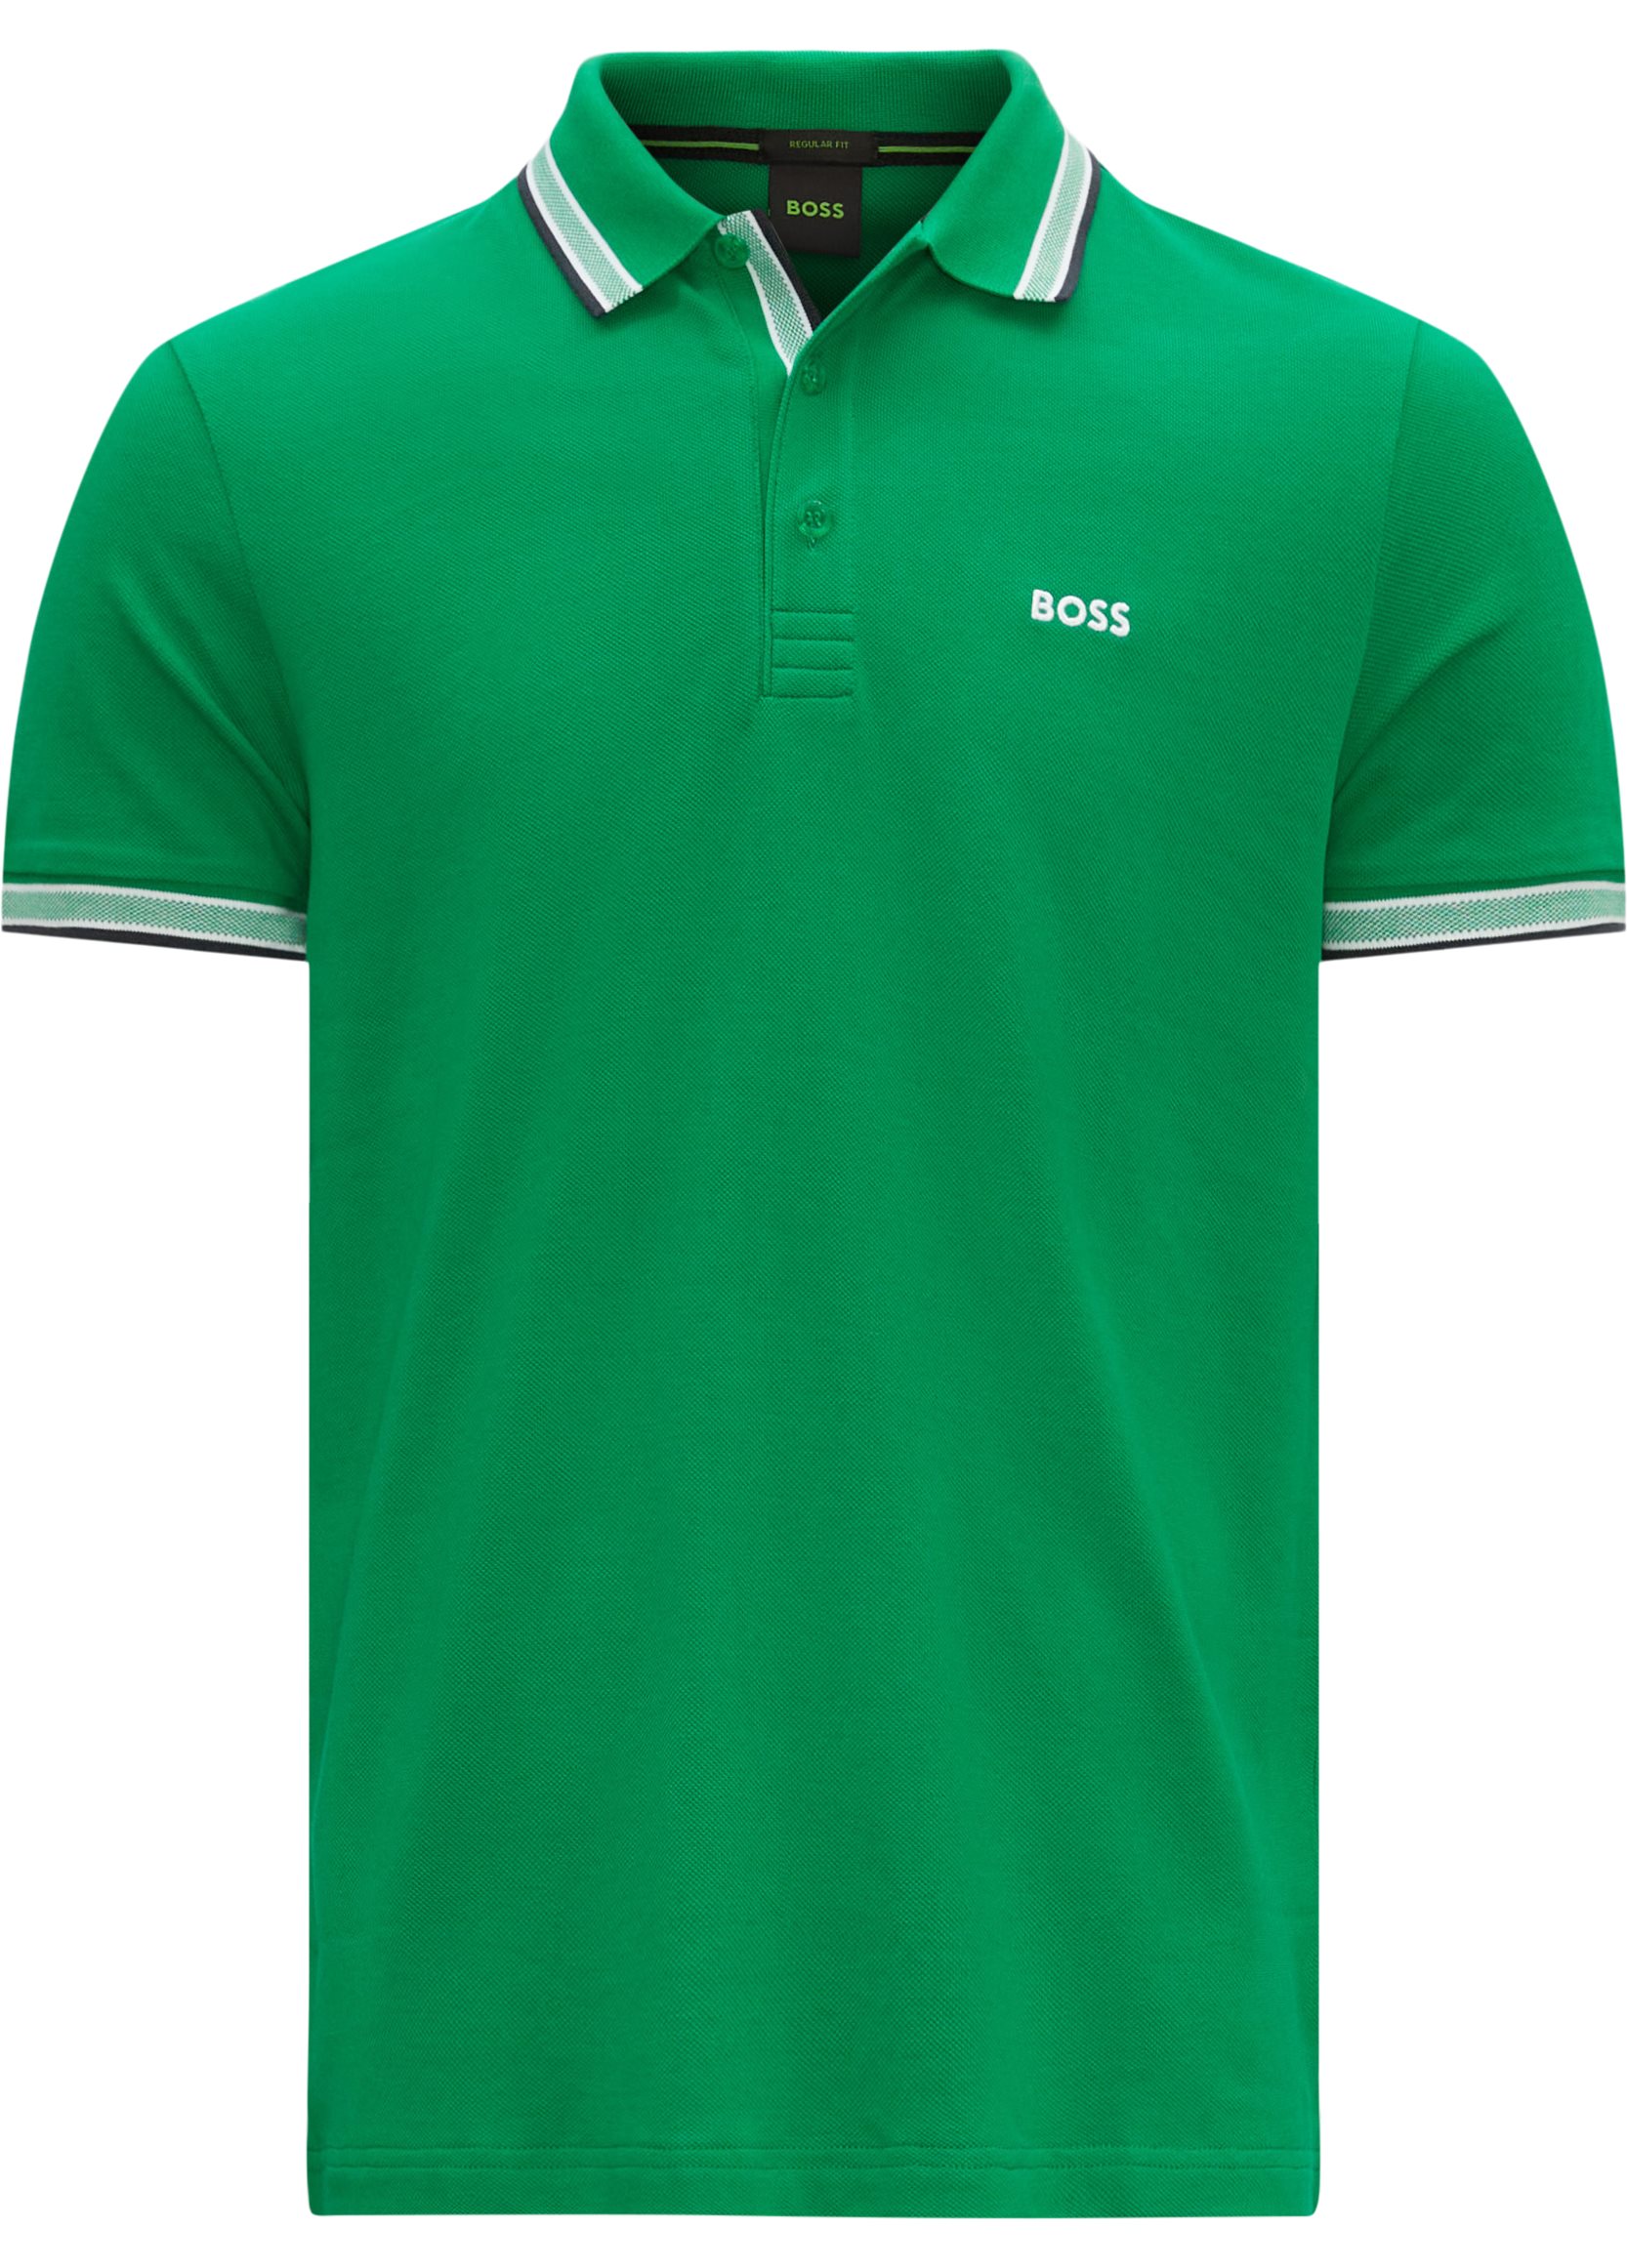 PADDY T-shirts GRØN fra BOSS Athleisure 599 DKK